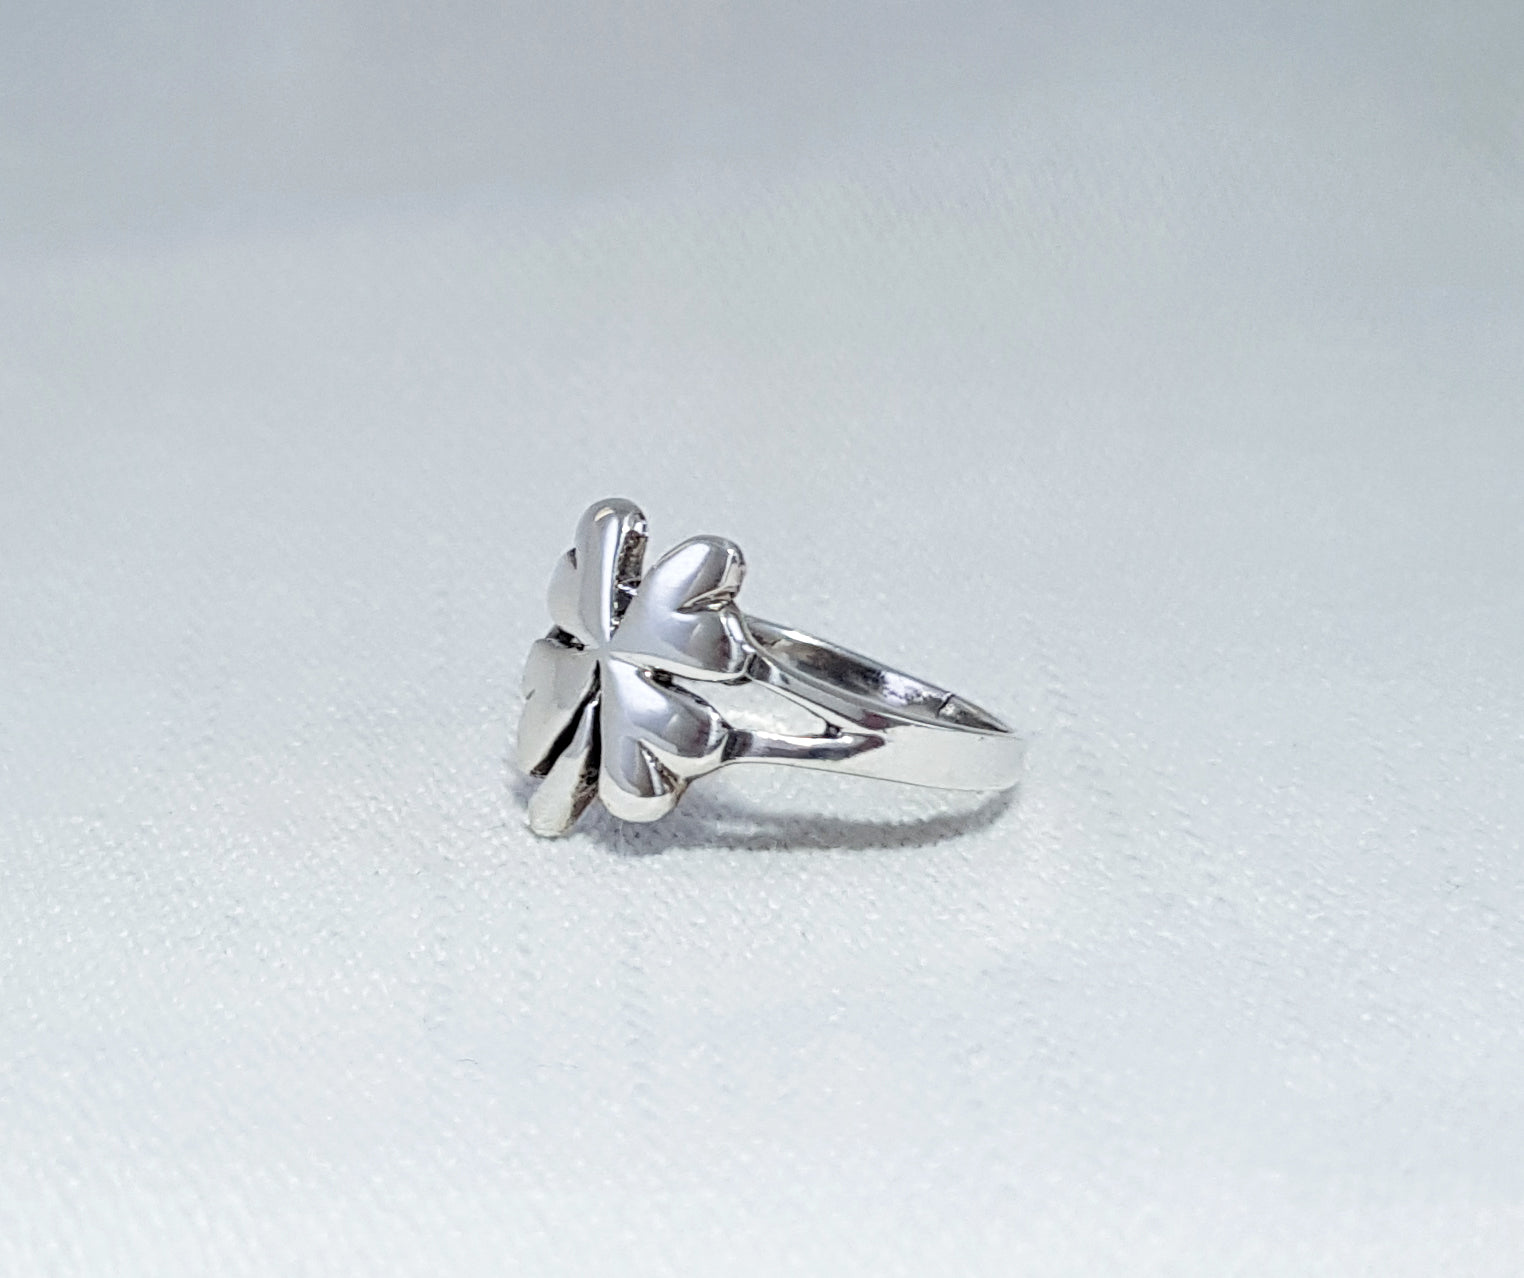 Sterling Silver Four Leaf Clover Ring